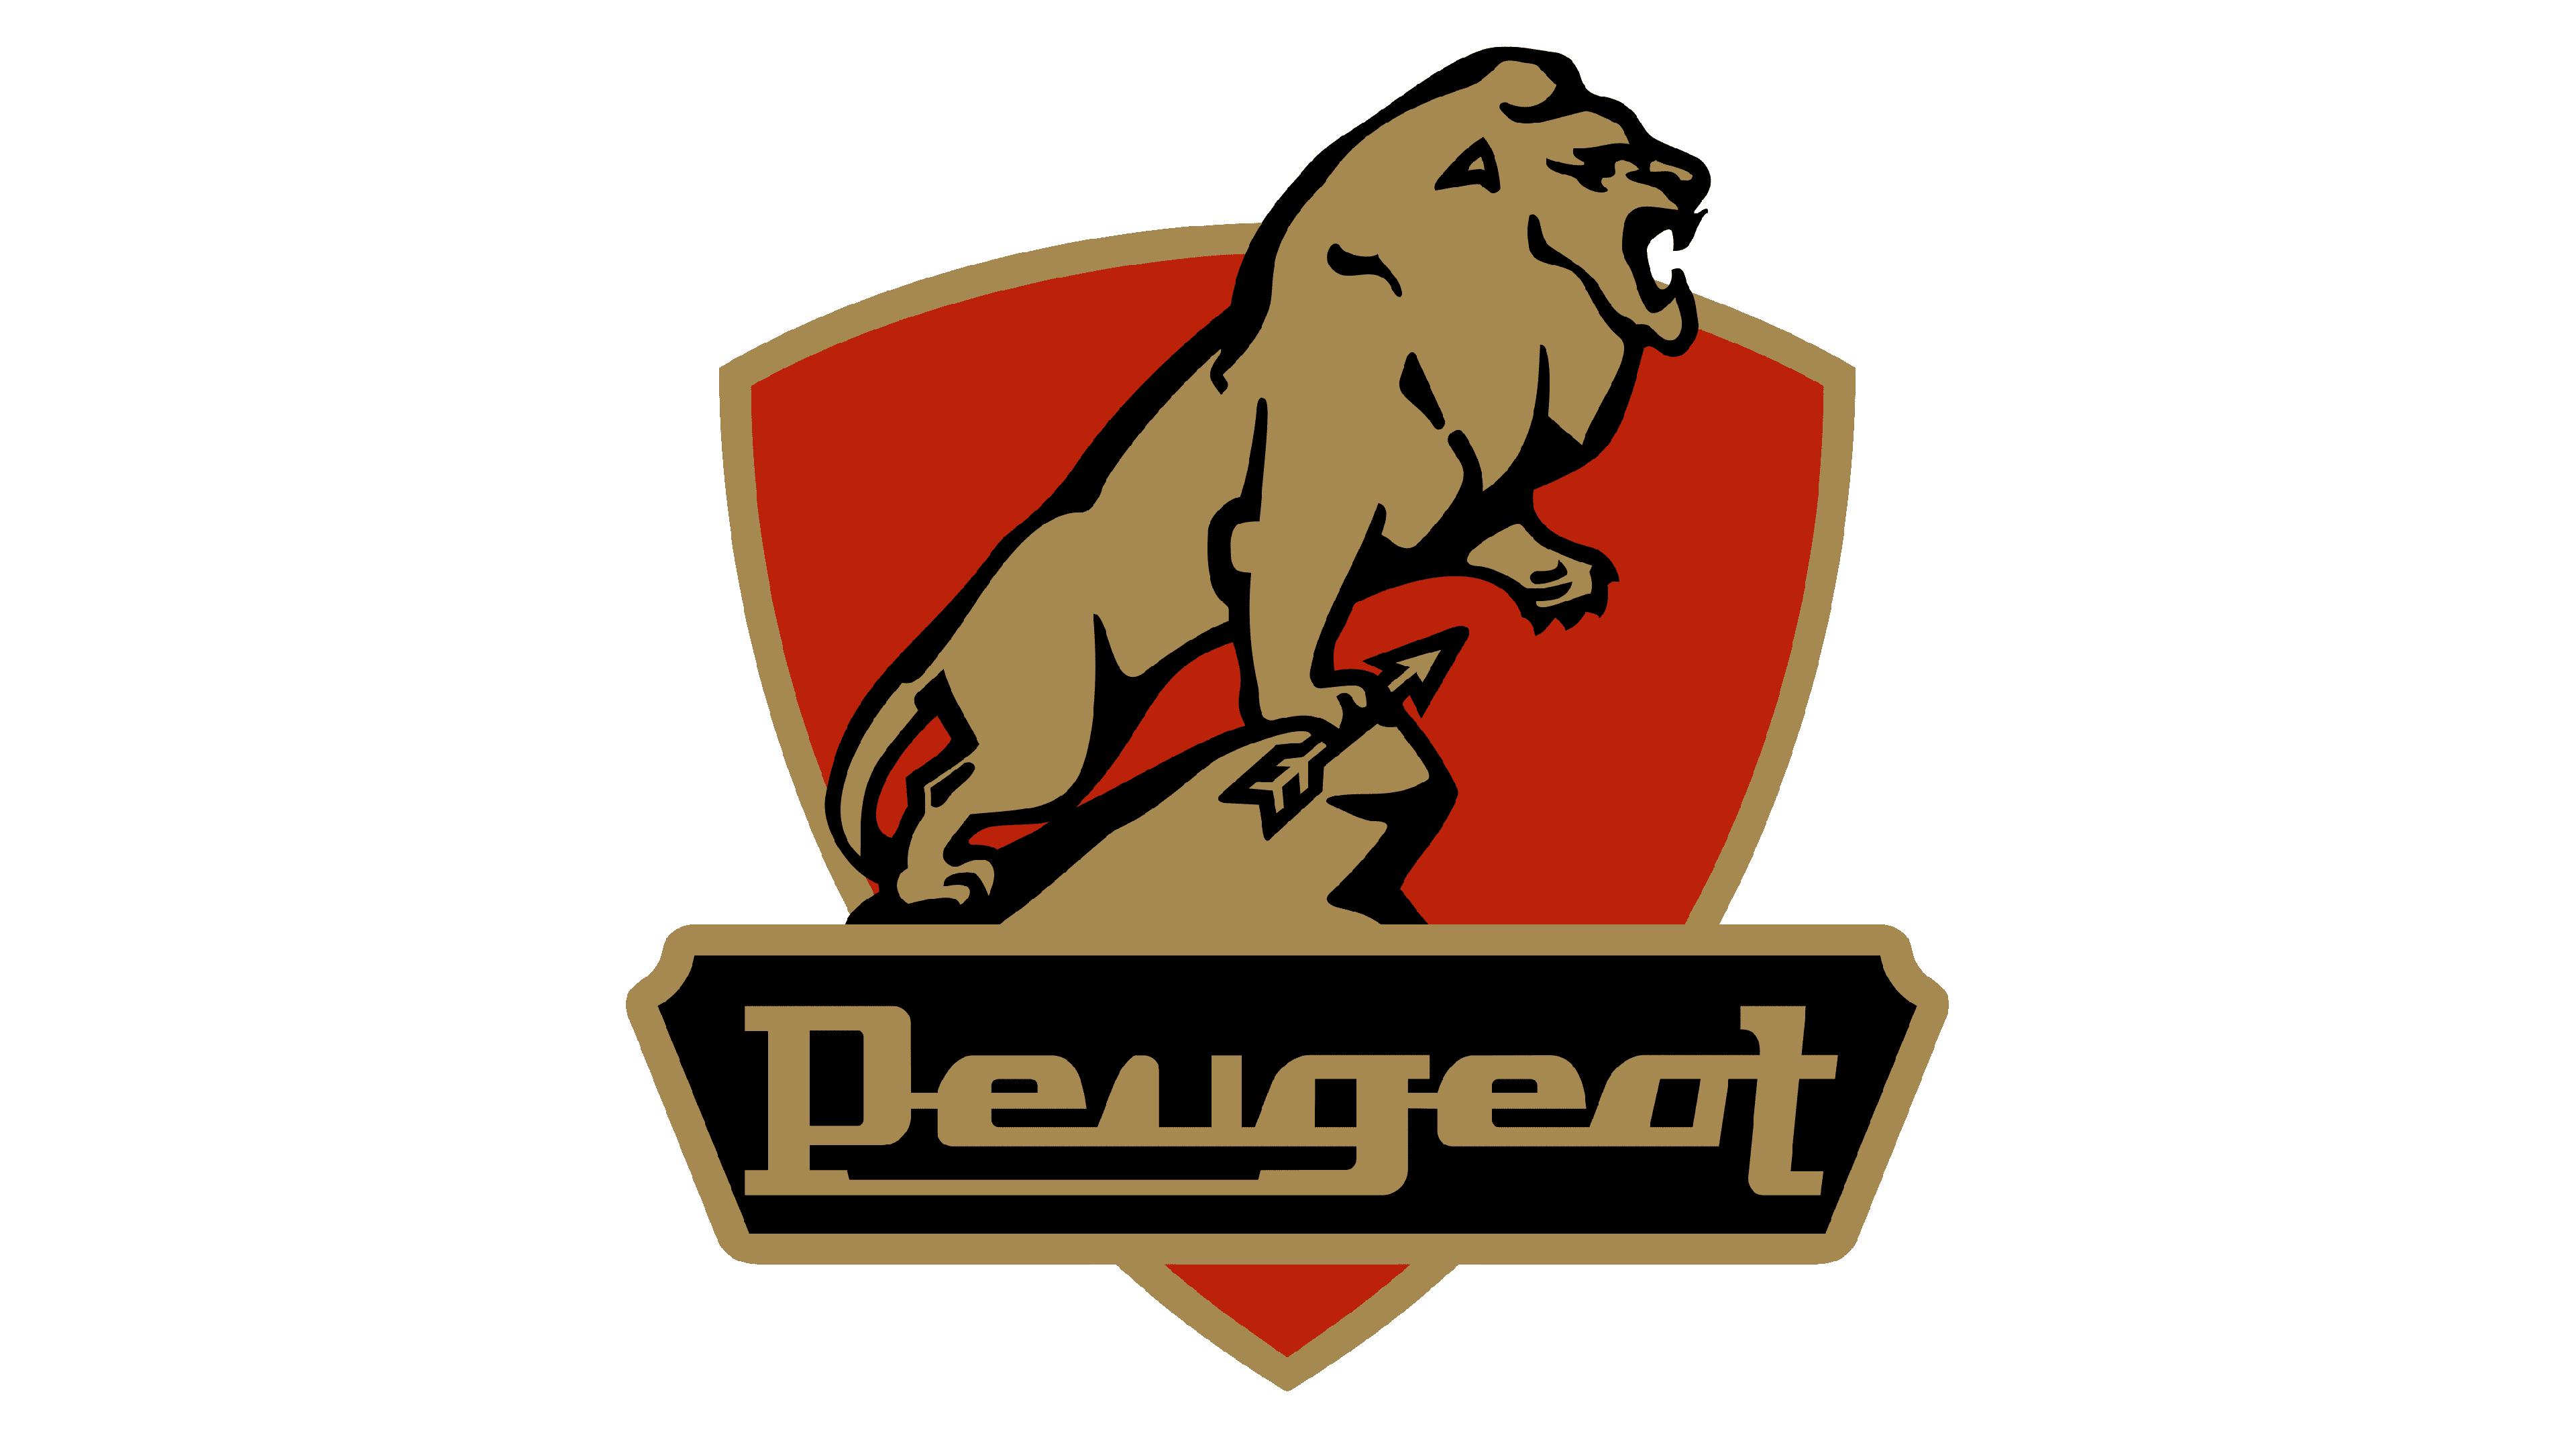 peugeot logo - Поиск в Google  Car logos, Car brands logos, Peugeot